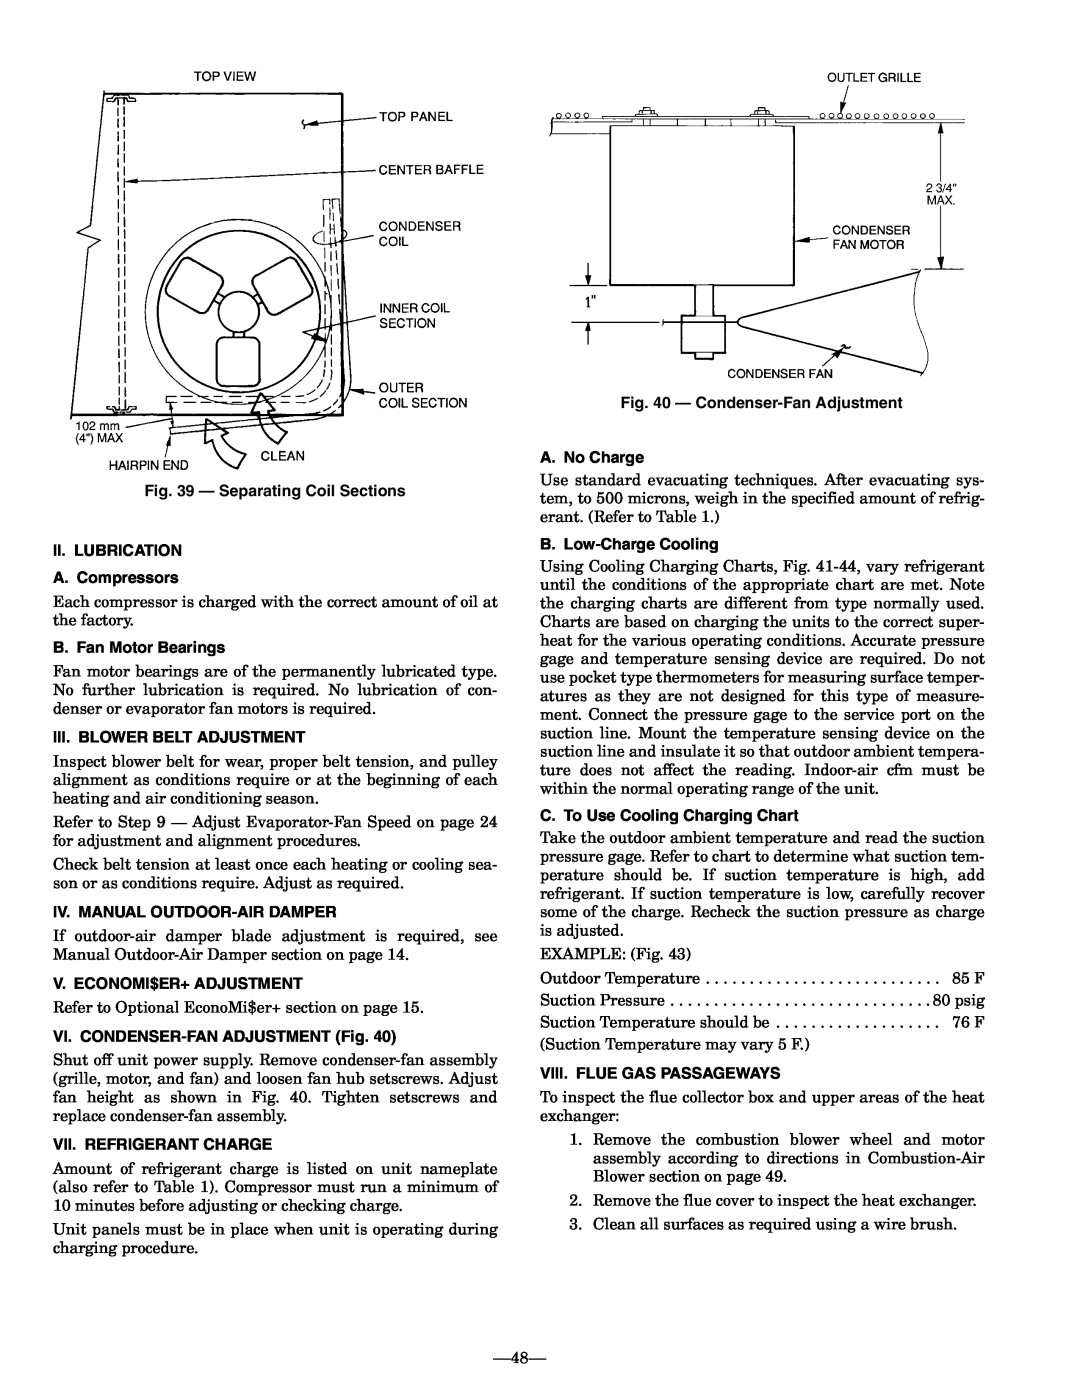 Bryant 580F Separating Coil Sections, II. LUBRICATION A. Compressors, B. Fan Motor Bearings, Iii. Blower Belt Adjustment 